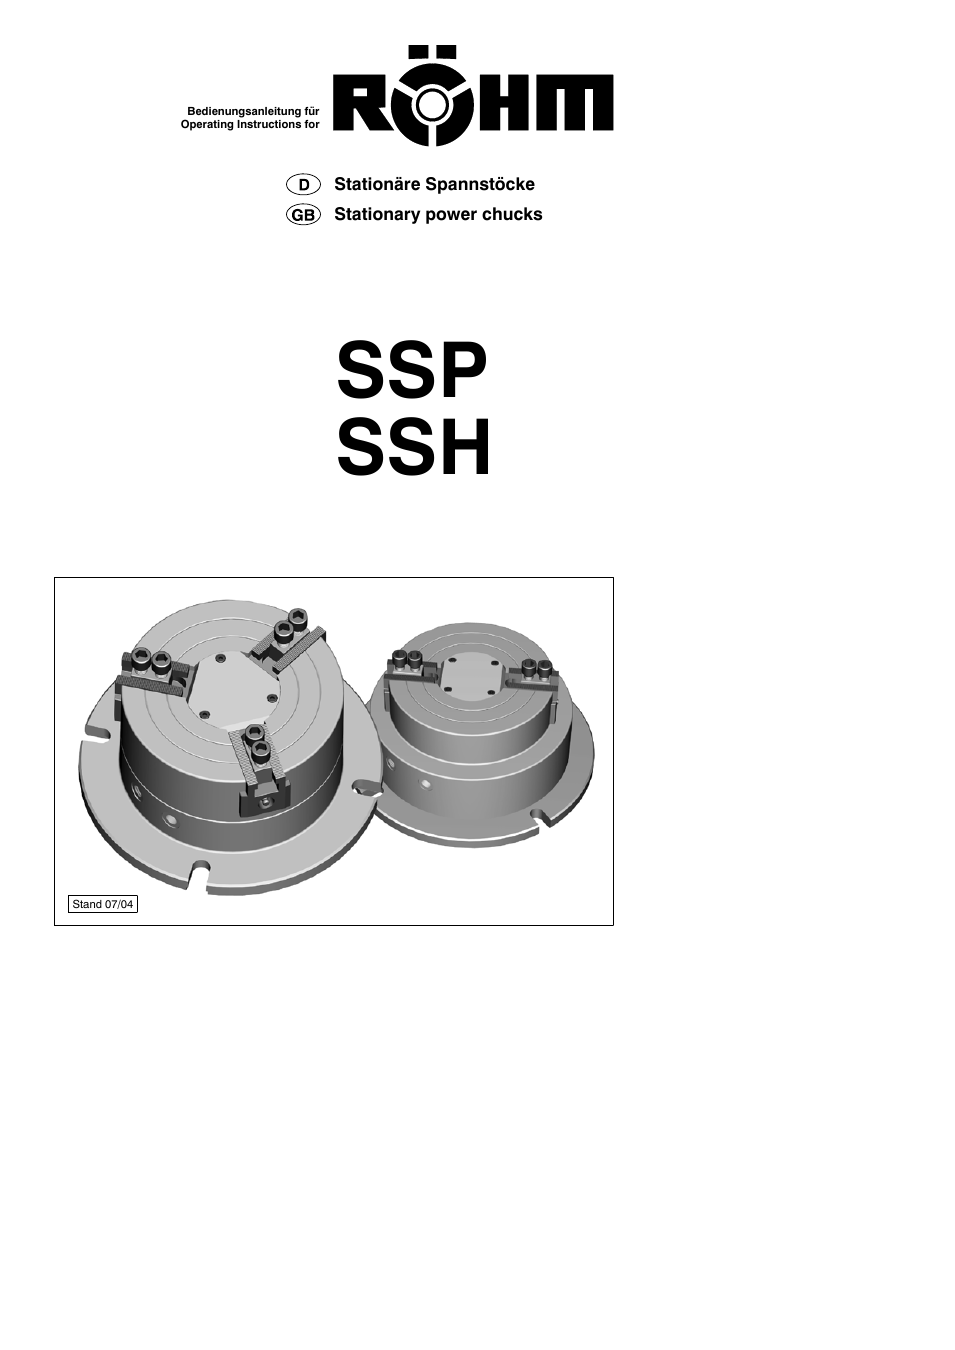 SSP / SSH - Stationary power chucks